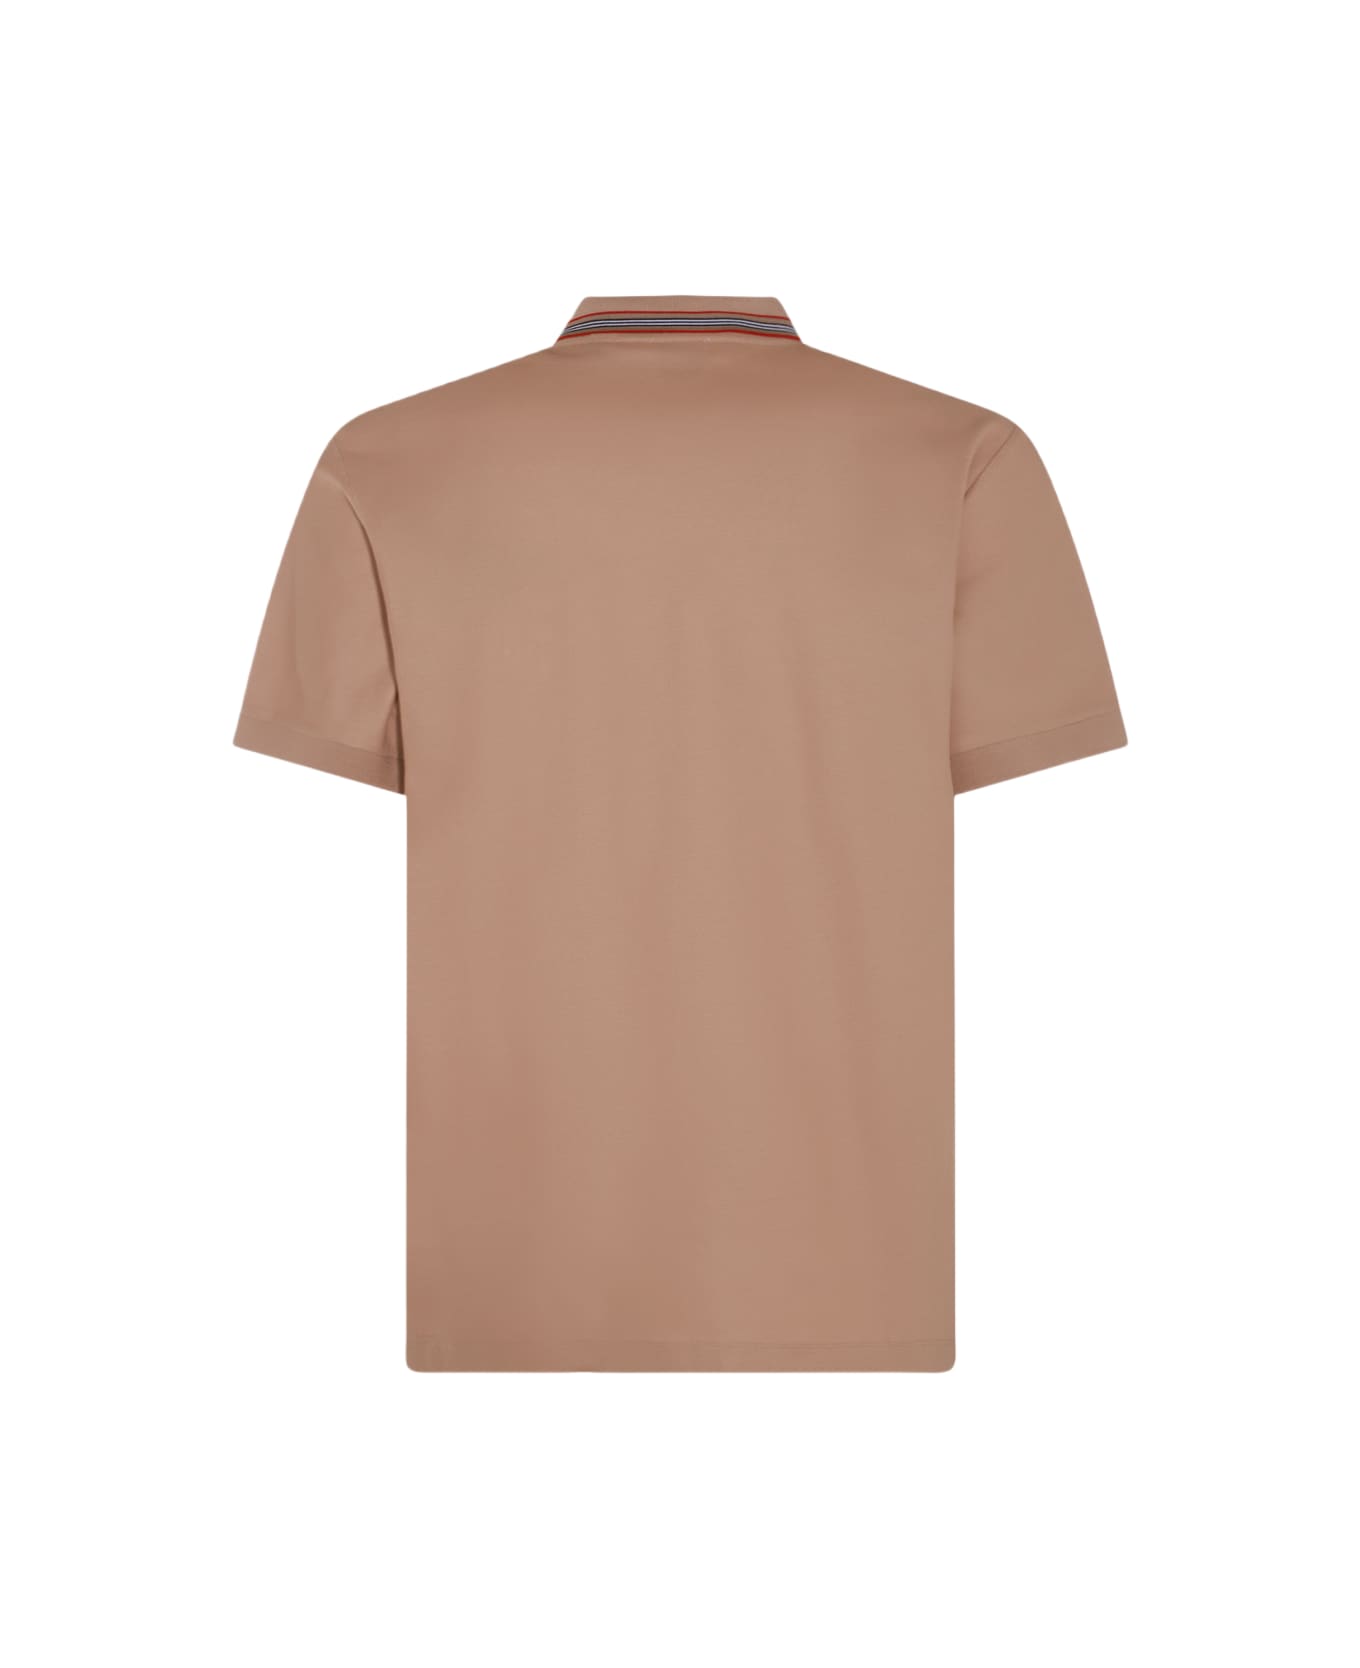 Burberry Beige Cotton Polo Shirt - SOFT FAWN